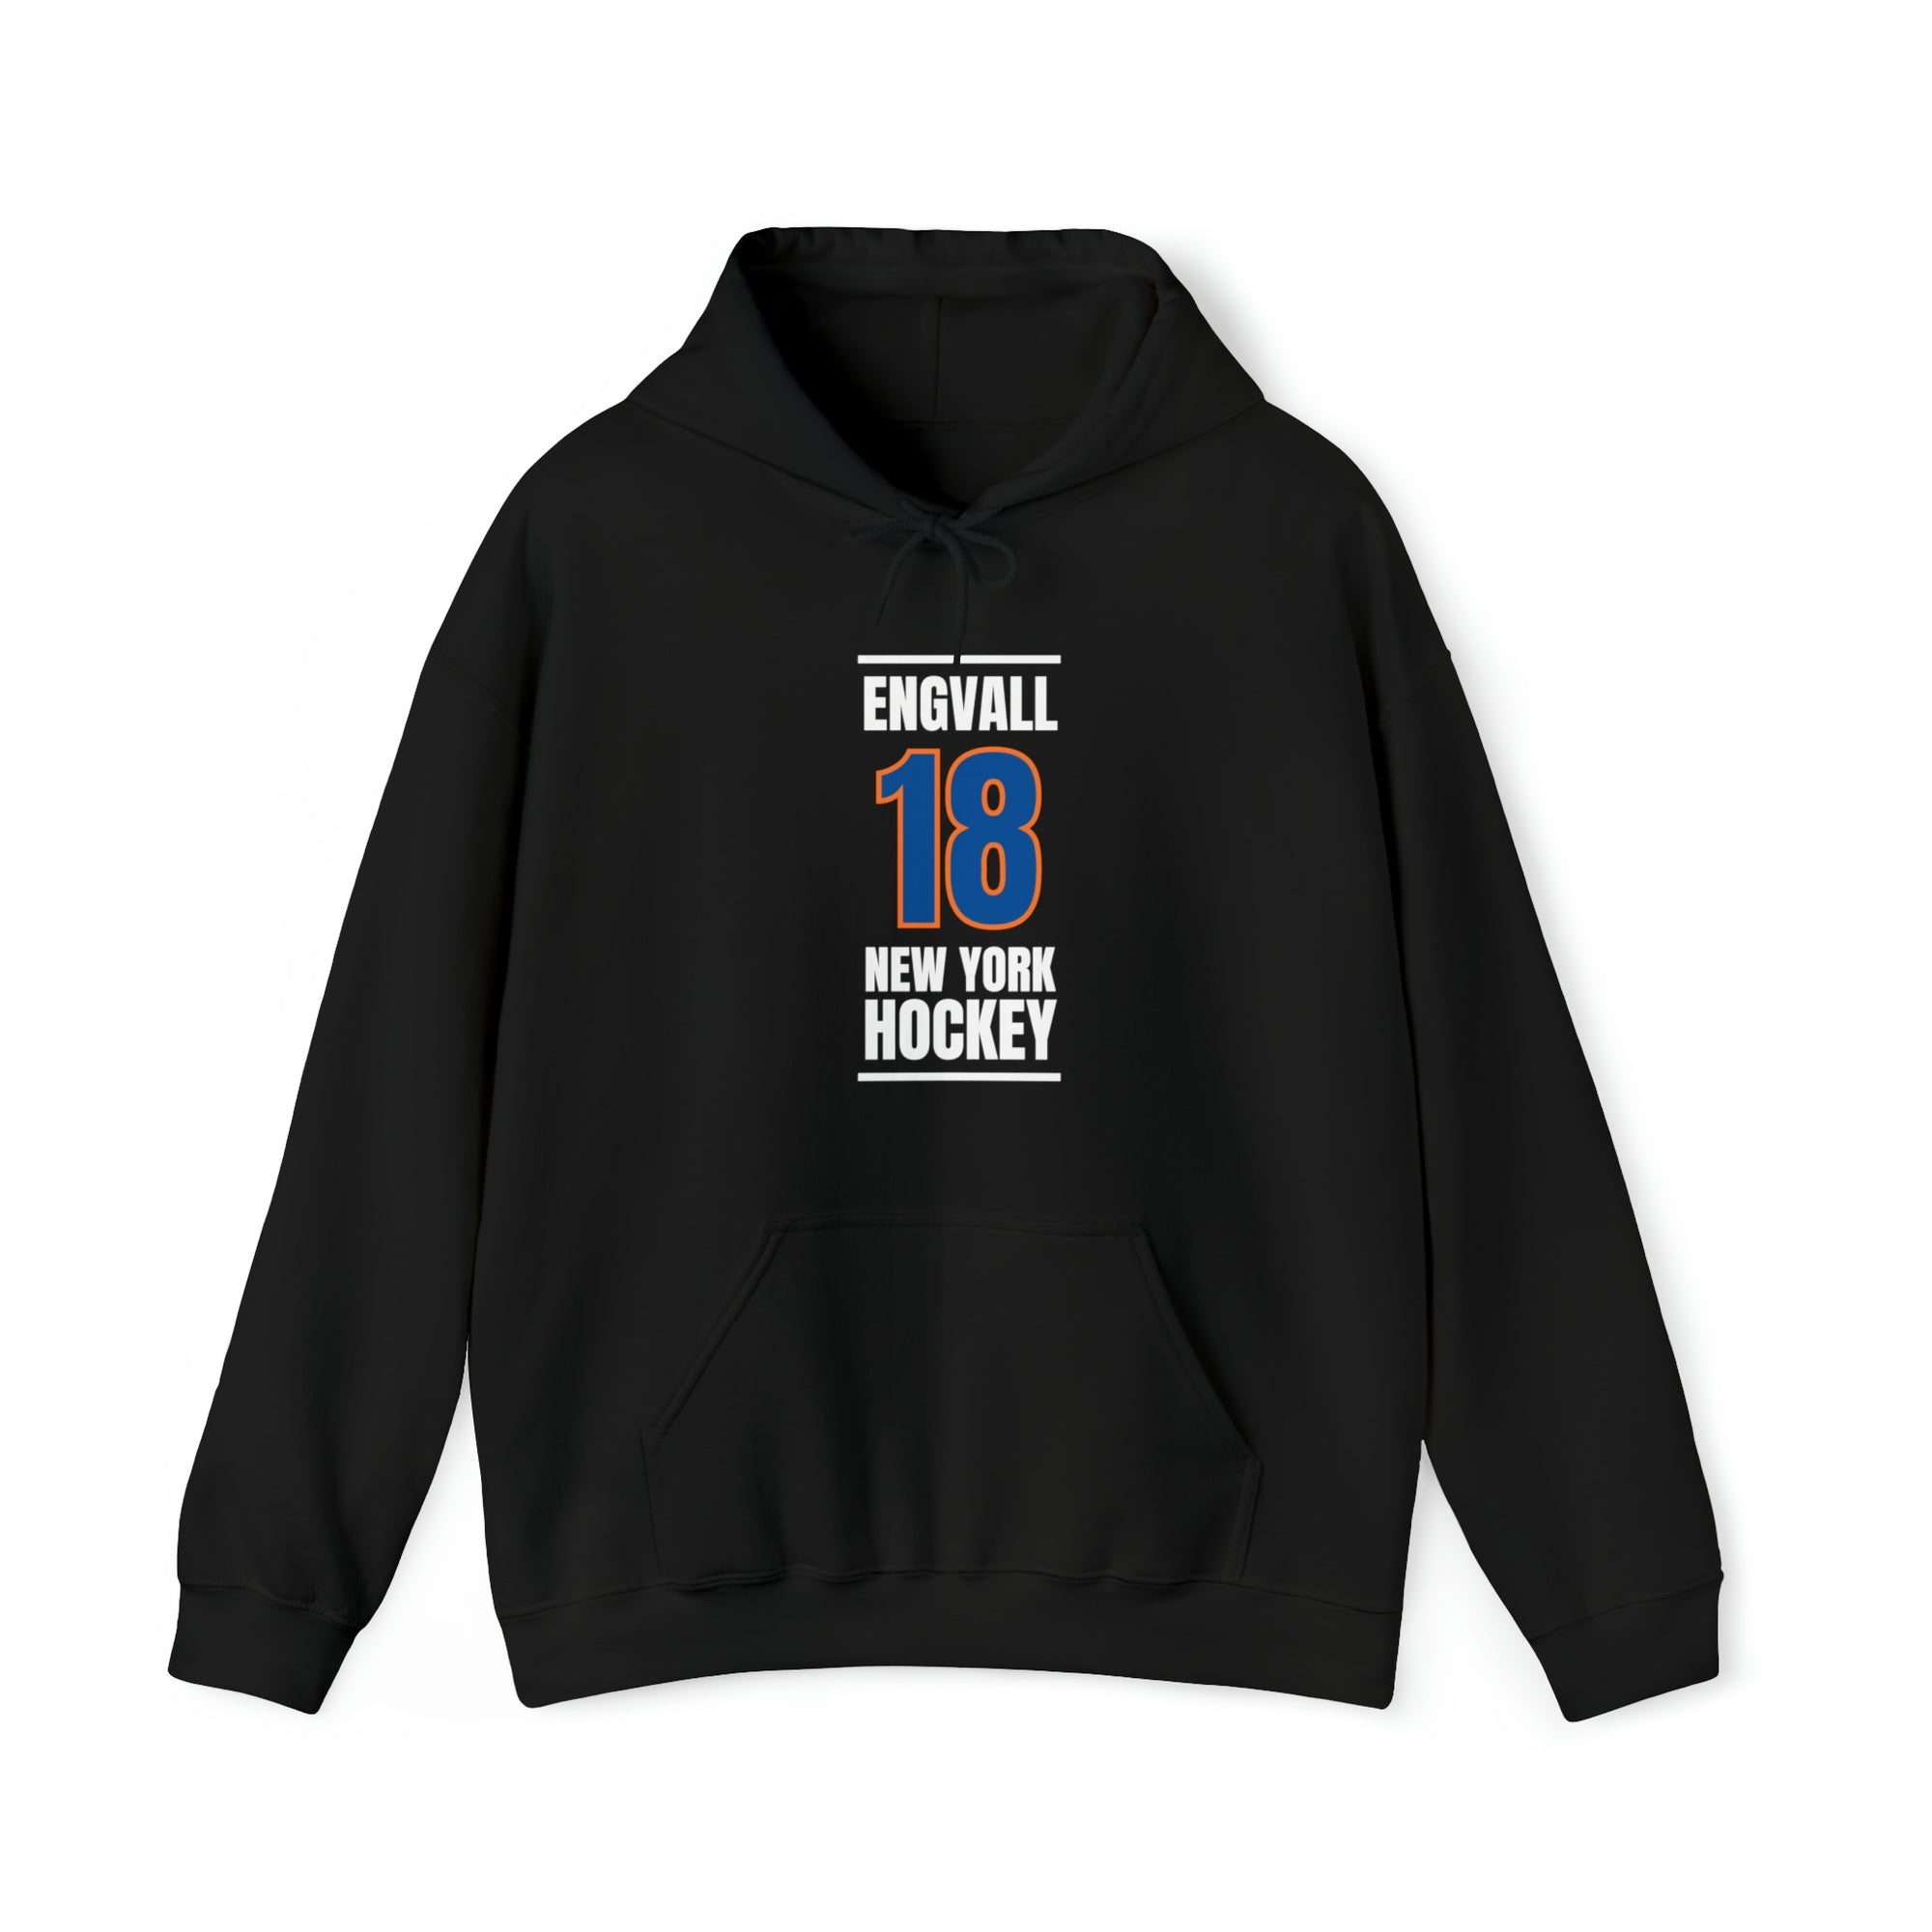 Engvall 18 New York Hockey Blue Vertical Design Unisex Hooded Sweatshirt